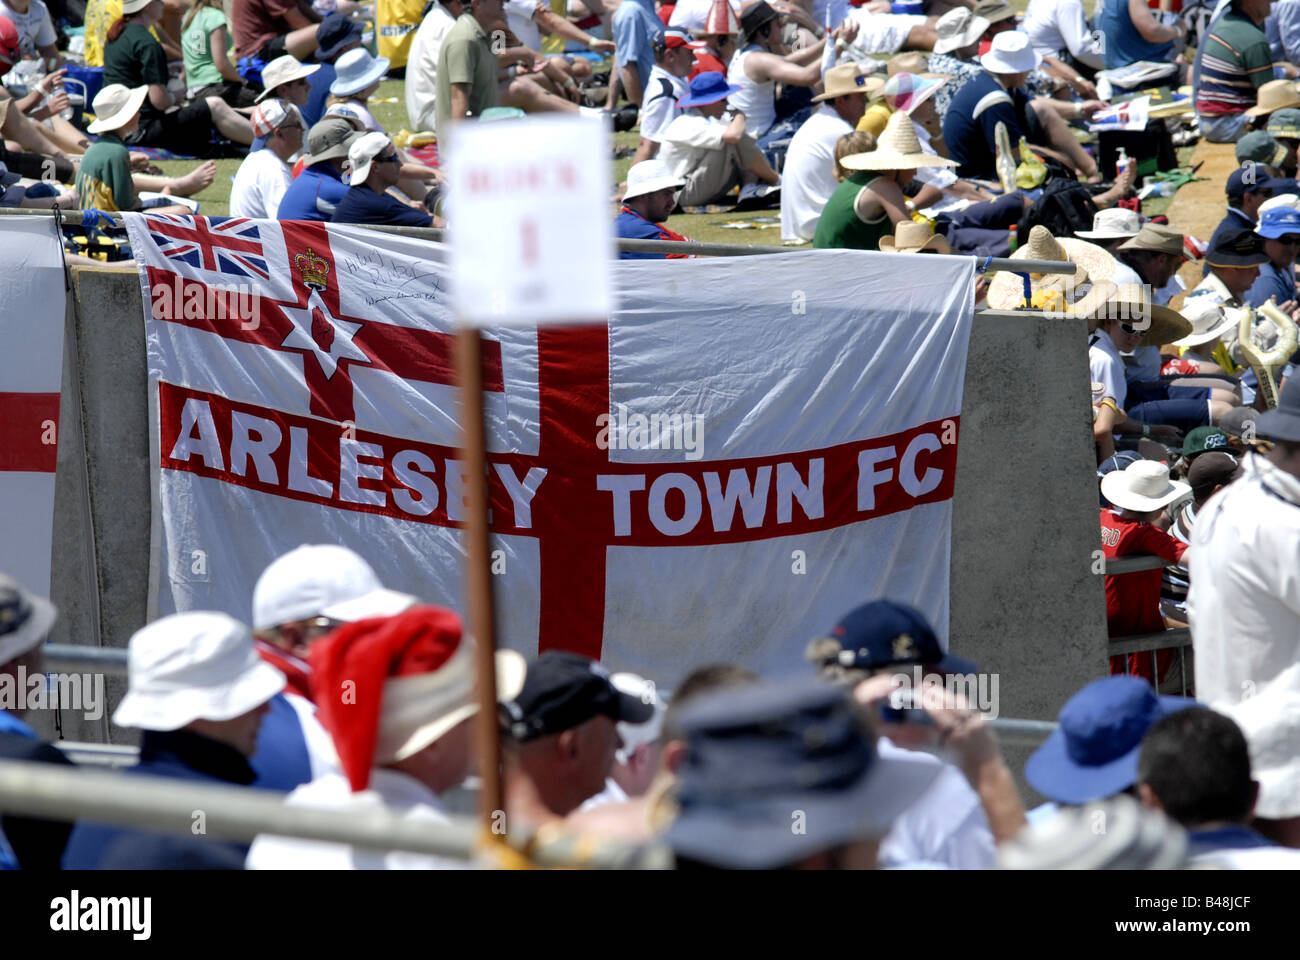 Arlesey Town FC banner at England versus Australia Cricket Match, Perth, Western Australia Stock Photo